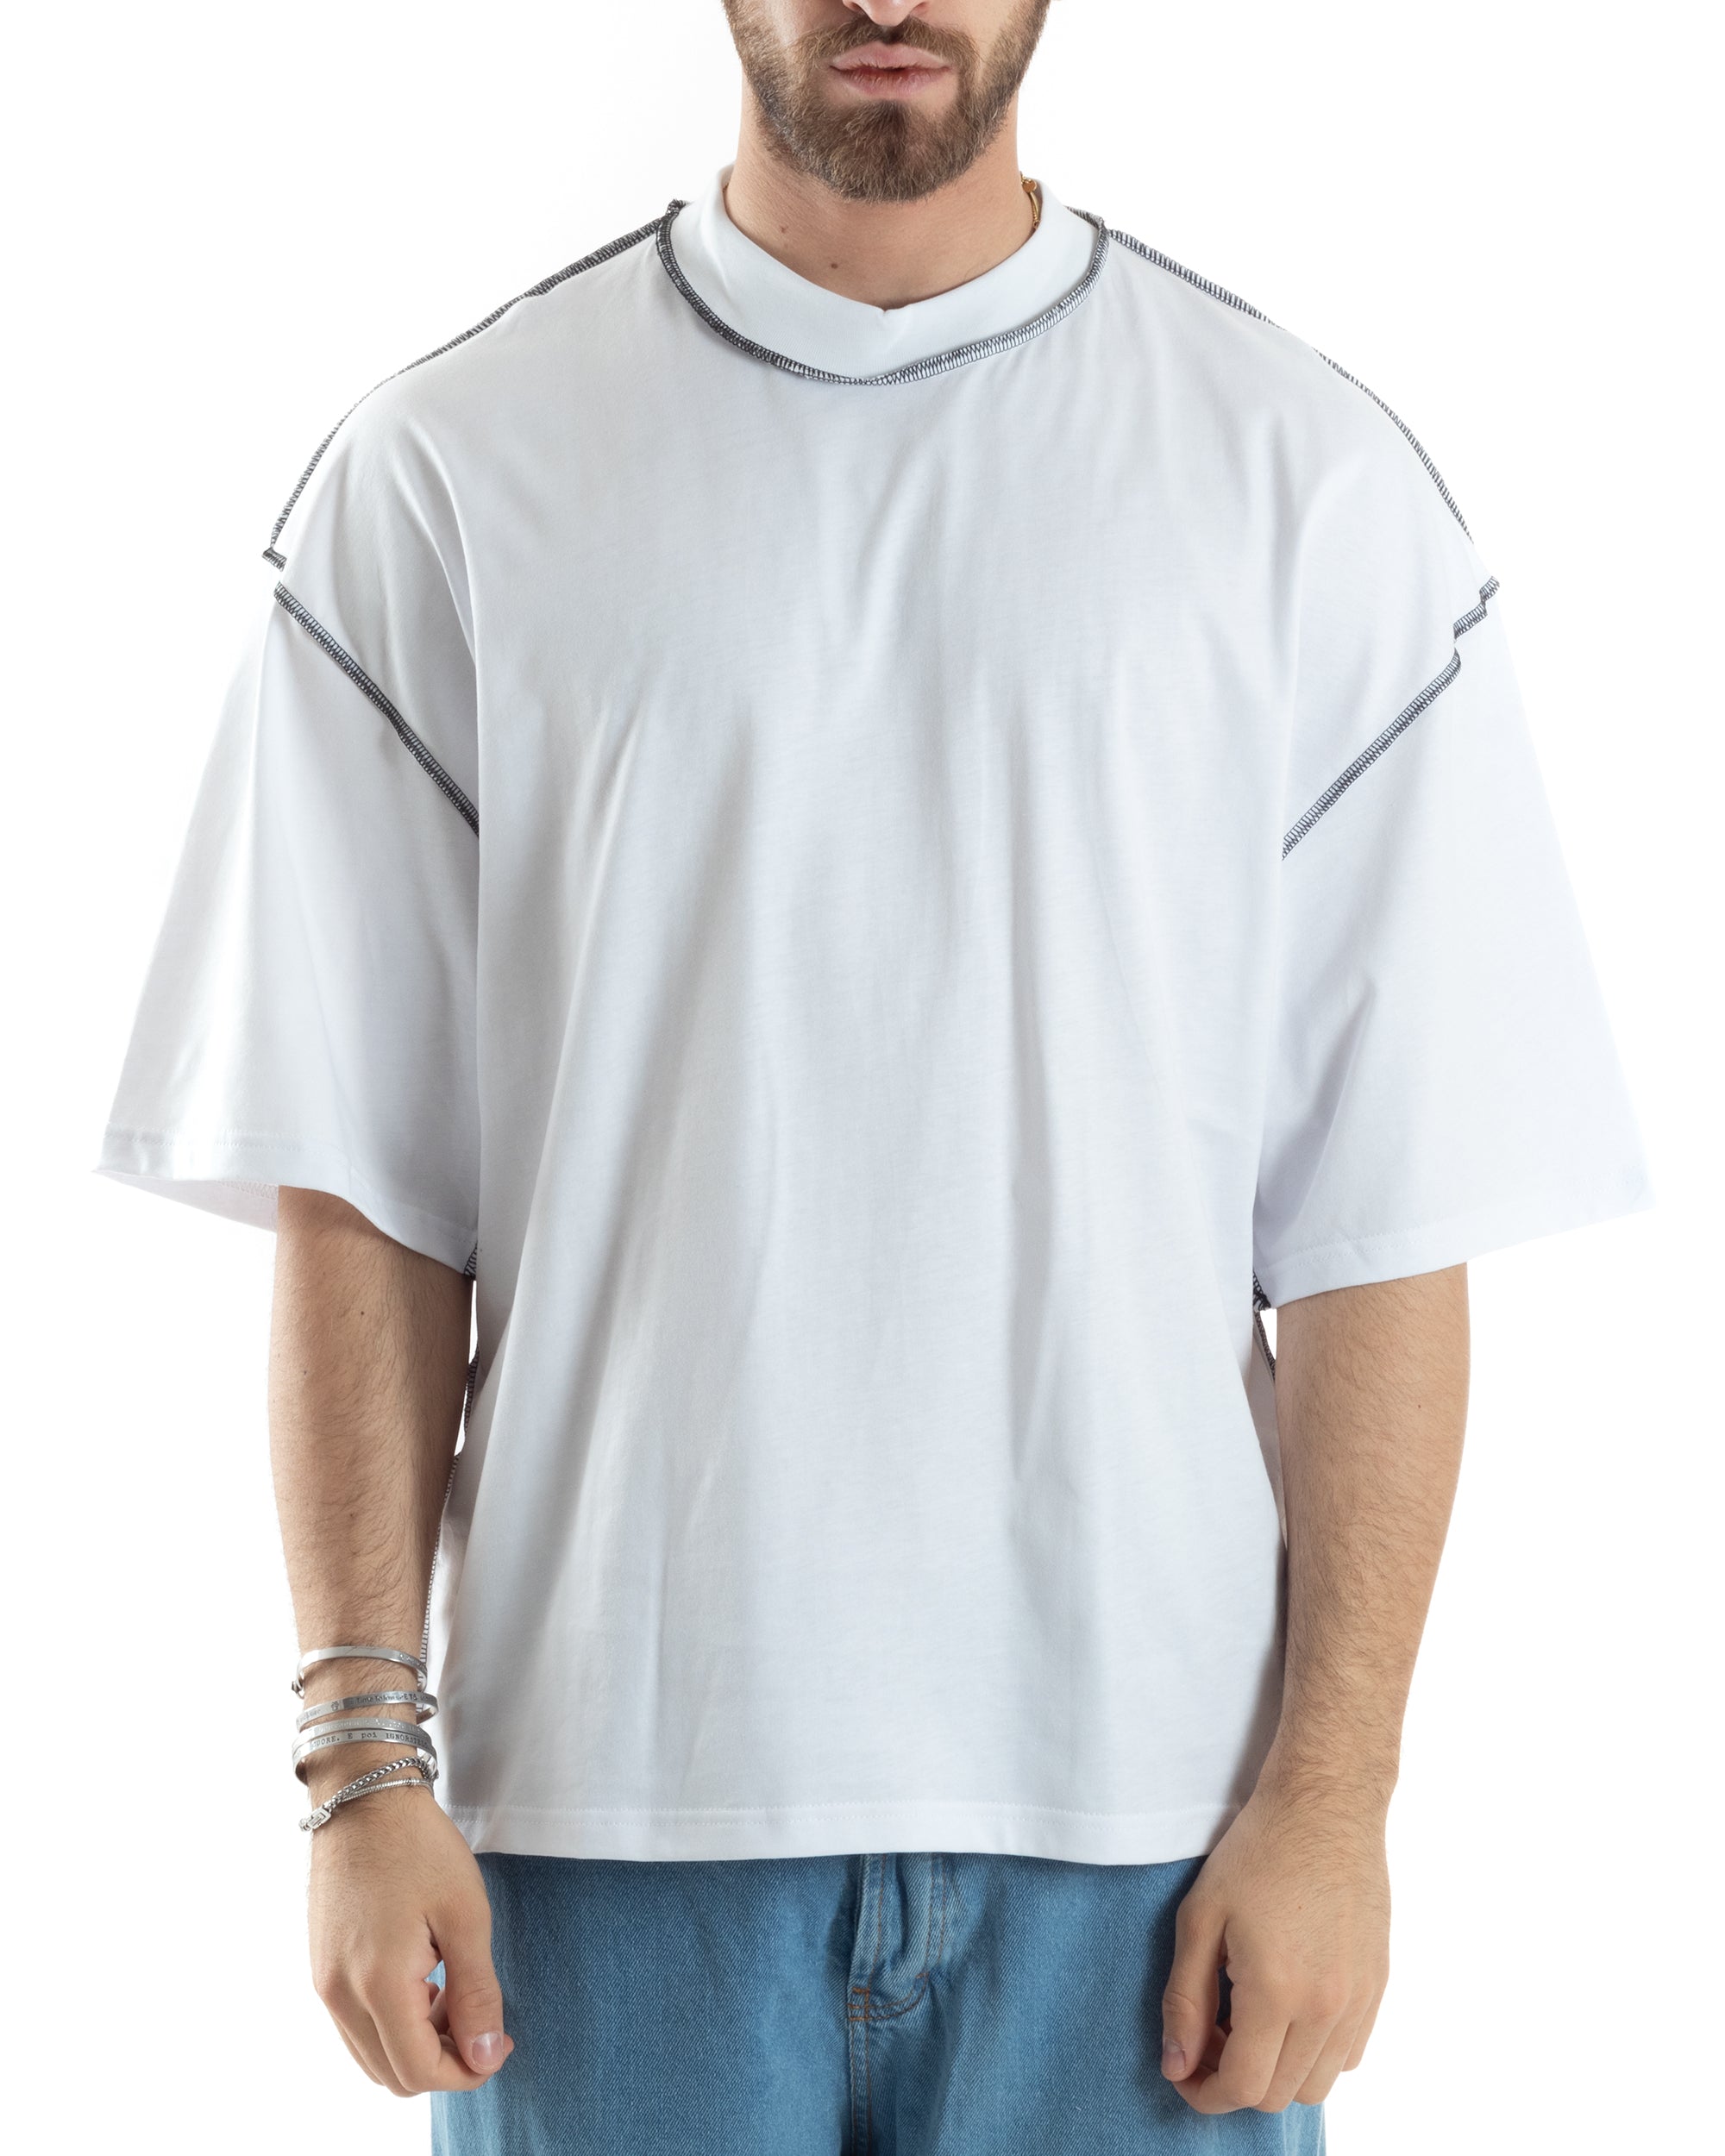 T-shirt Uomo Girocollo Boxy Fit Oversize Spalla Scesa Gola Alta Cuciture A Contrasto Cotone Bianco GIOSAL-TS3033A